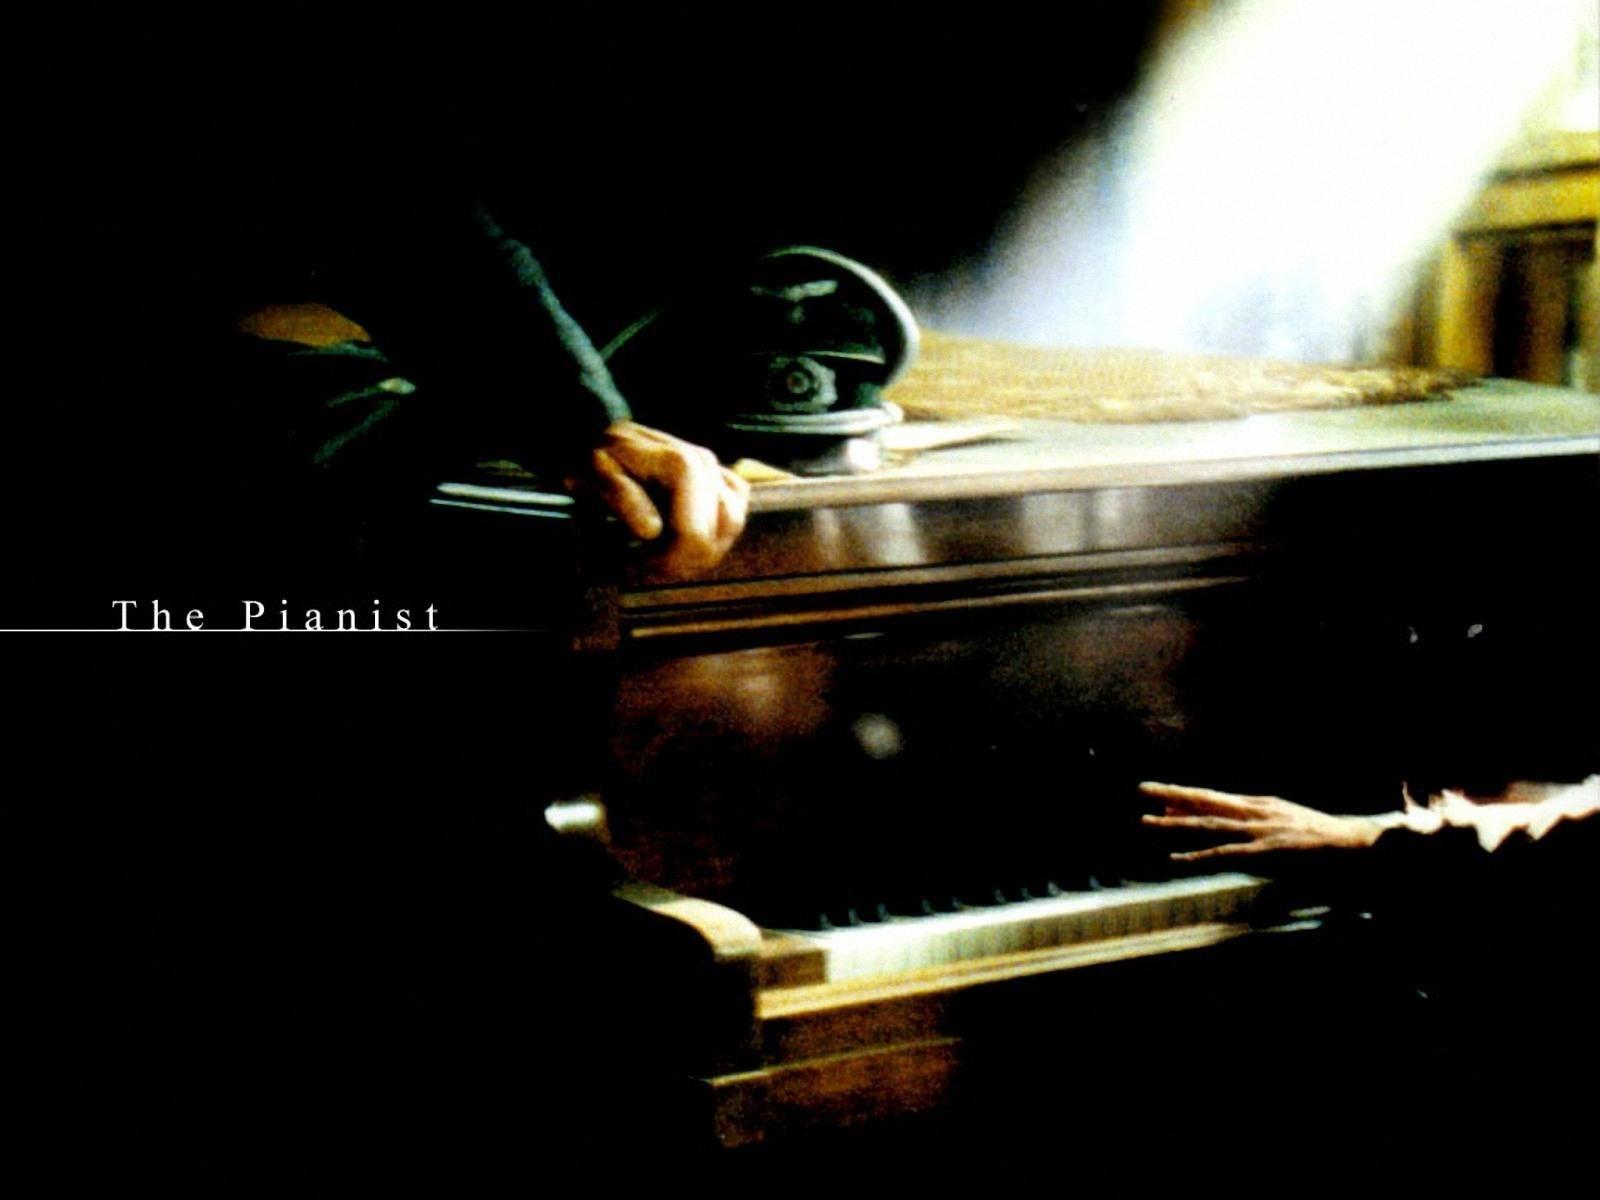 The Pianist Wallpaper, The Pianist Wallpaper & Picture Free Download